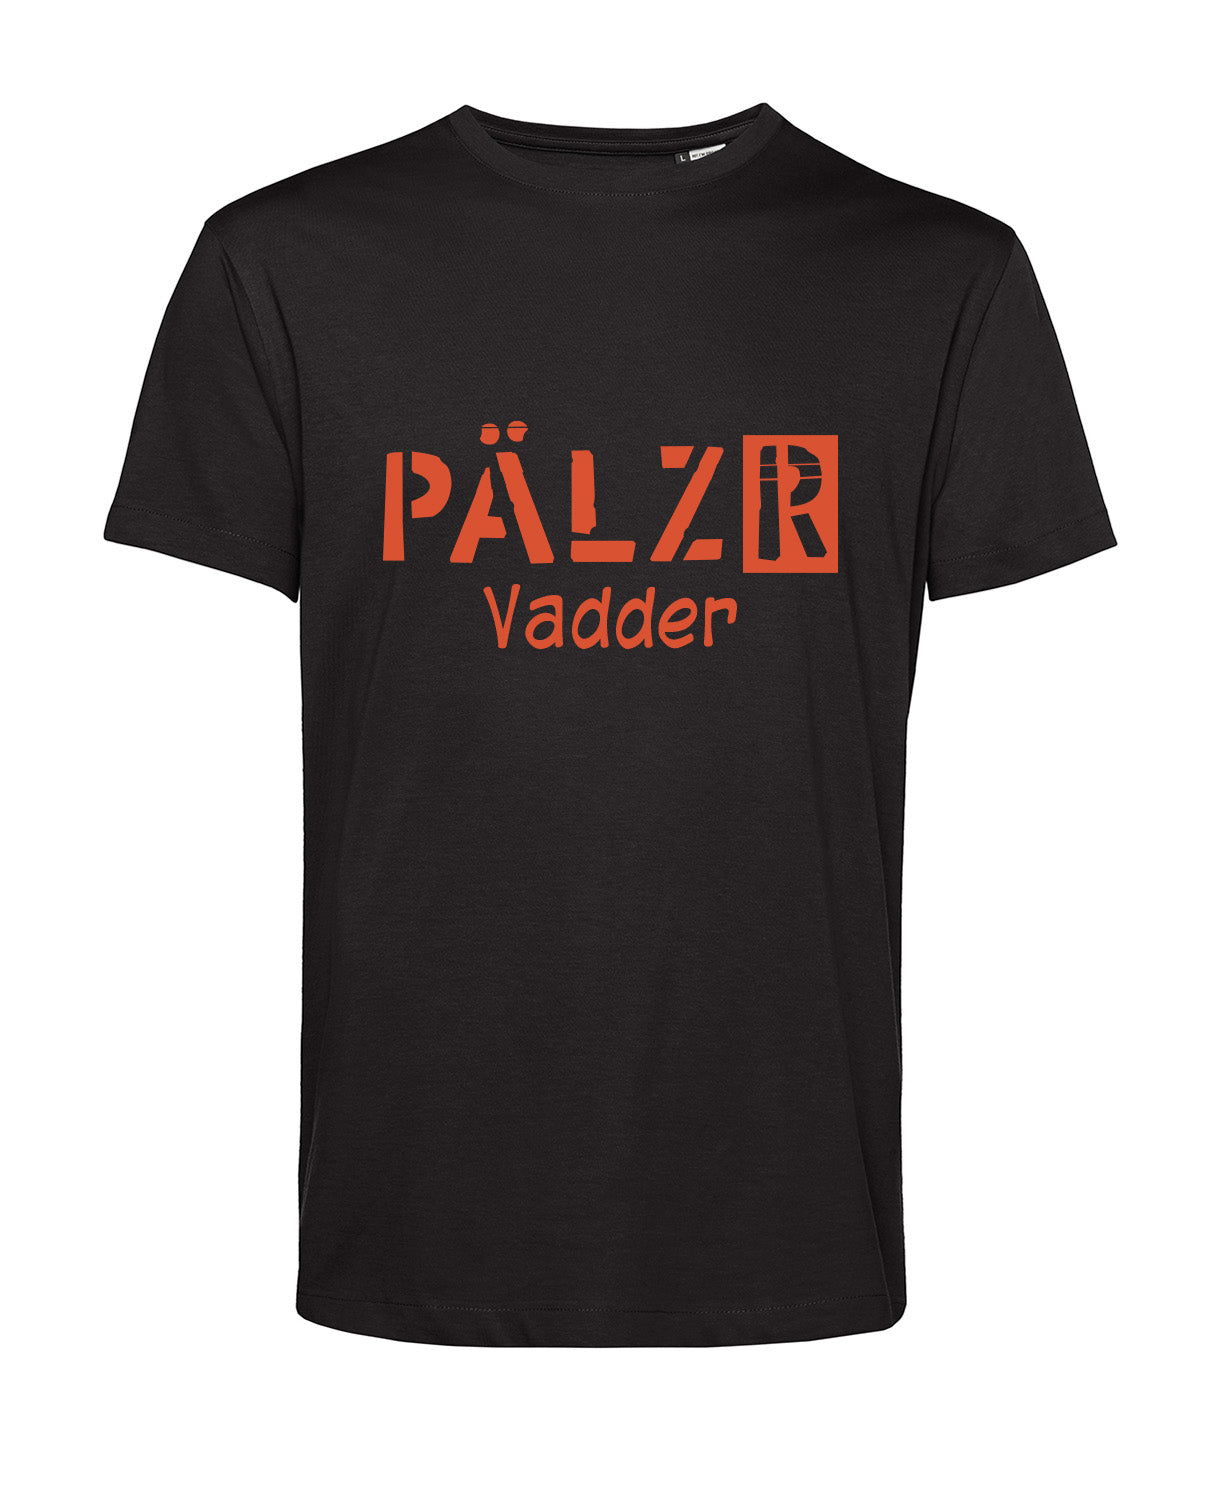 Männer T-Shirt | PÄLZR Vadder | schwarz | Logo orange